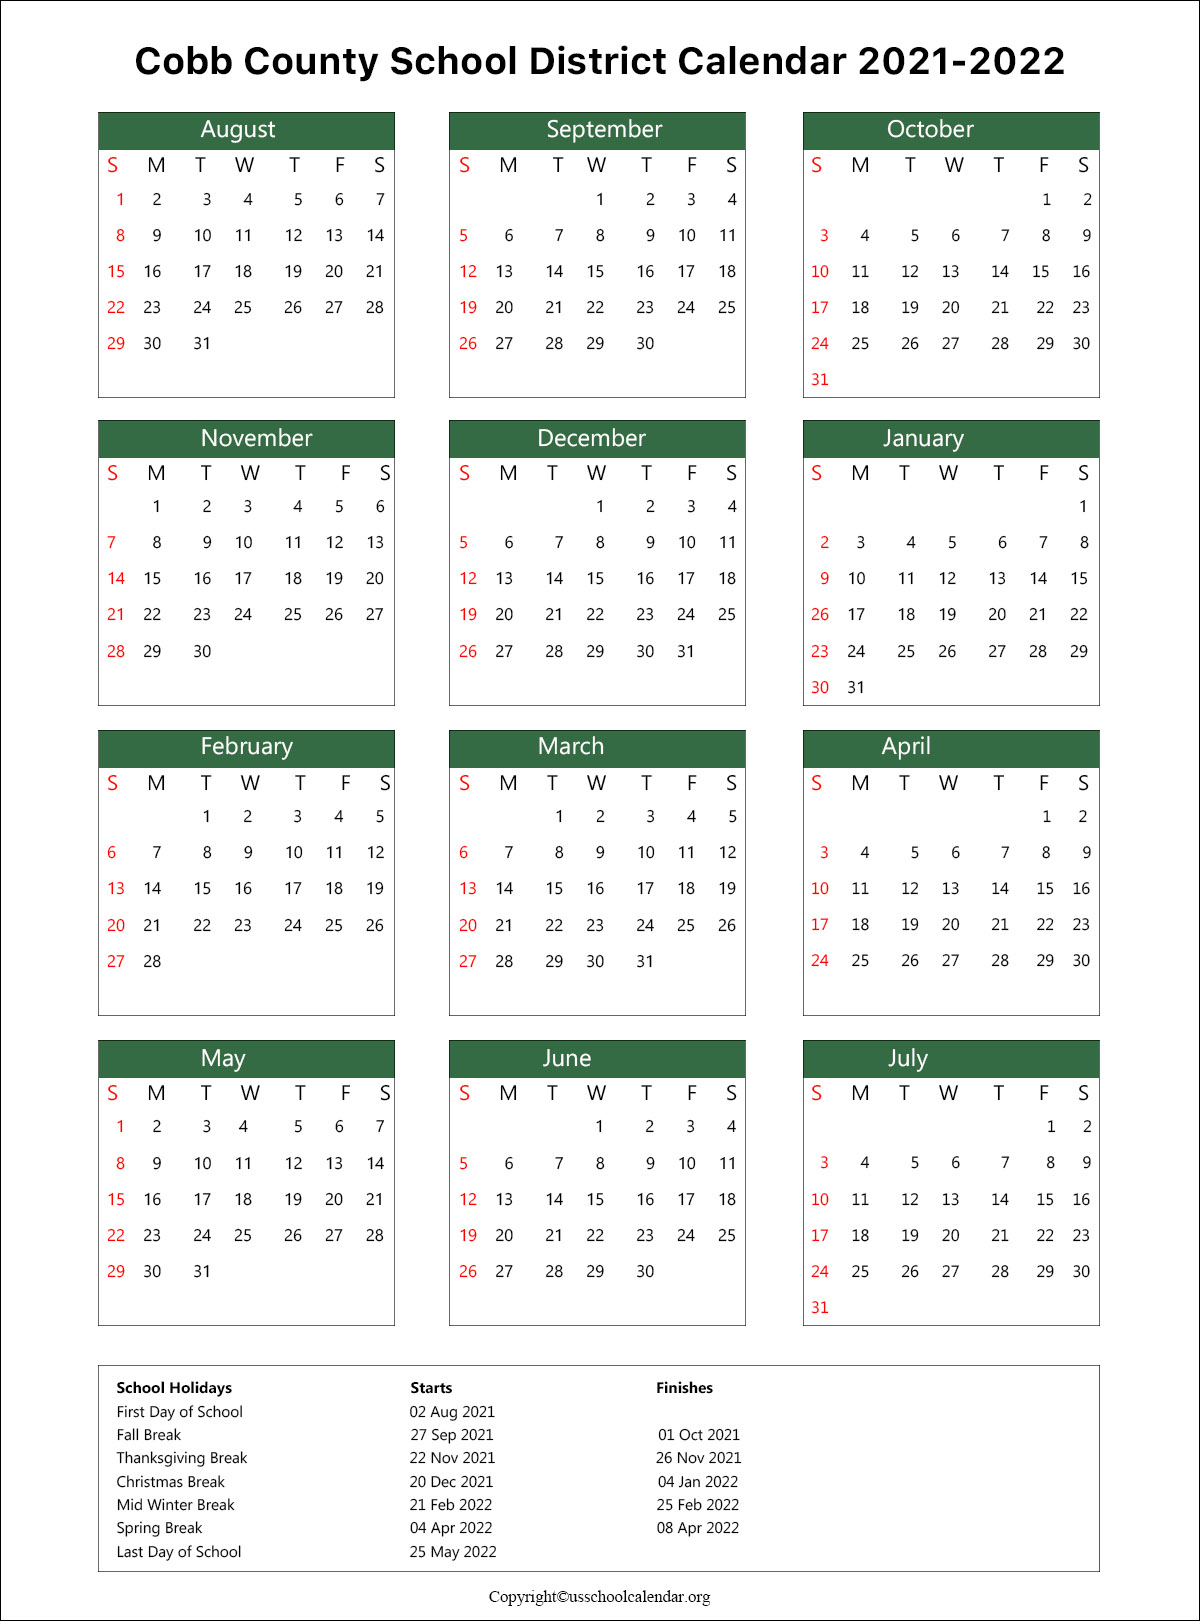 Cobb County School Calendar with Holidays 20212022